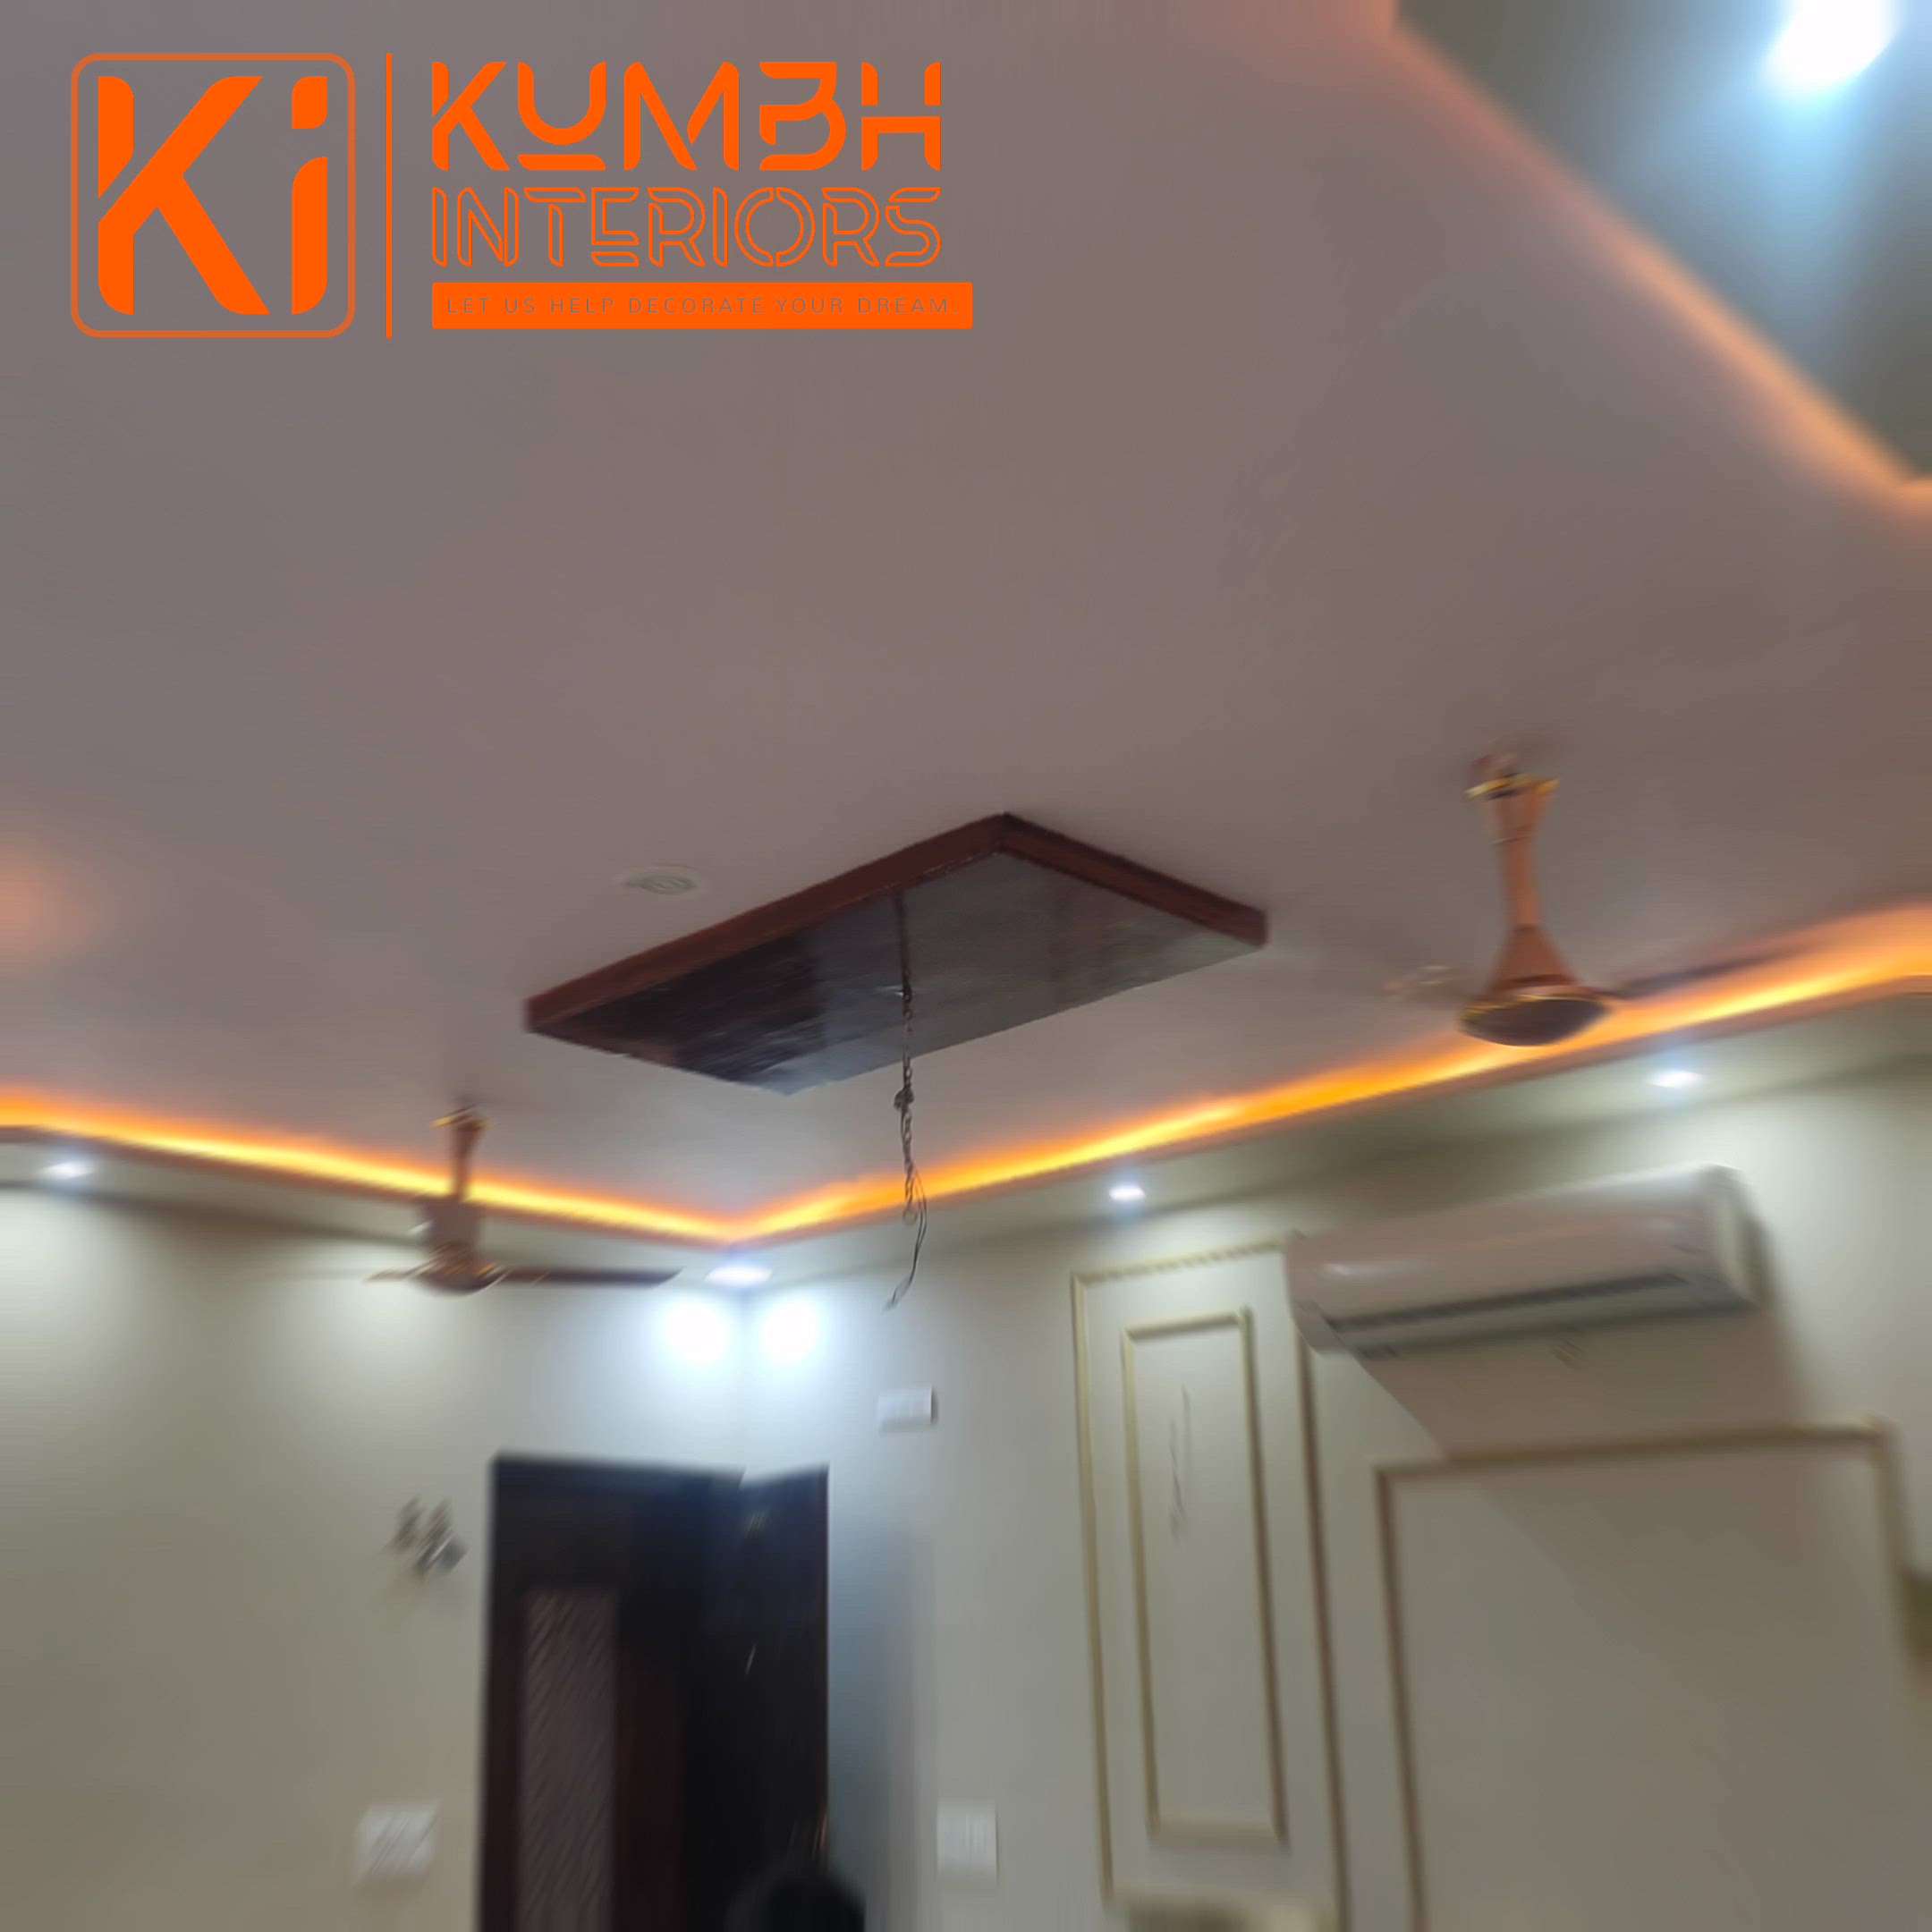 #InteriorDesigner 
#KitchenInterior #Architectural&Interior #kumbhinteriors #HouseDesigns 
for more information visit us at www.kumbhinteriors.com 
9460006956